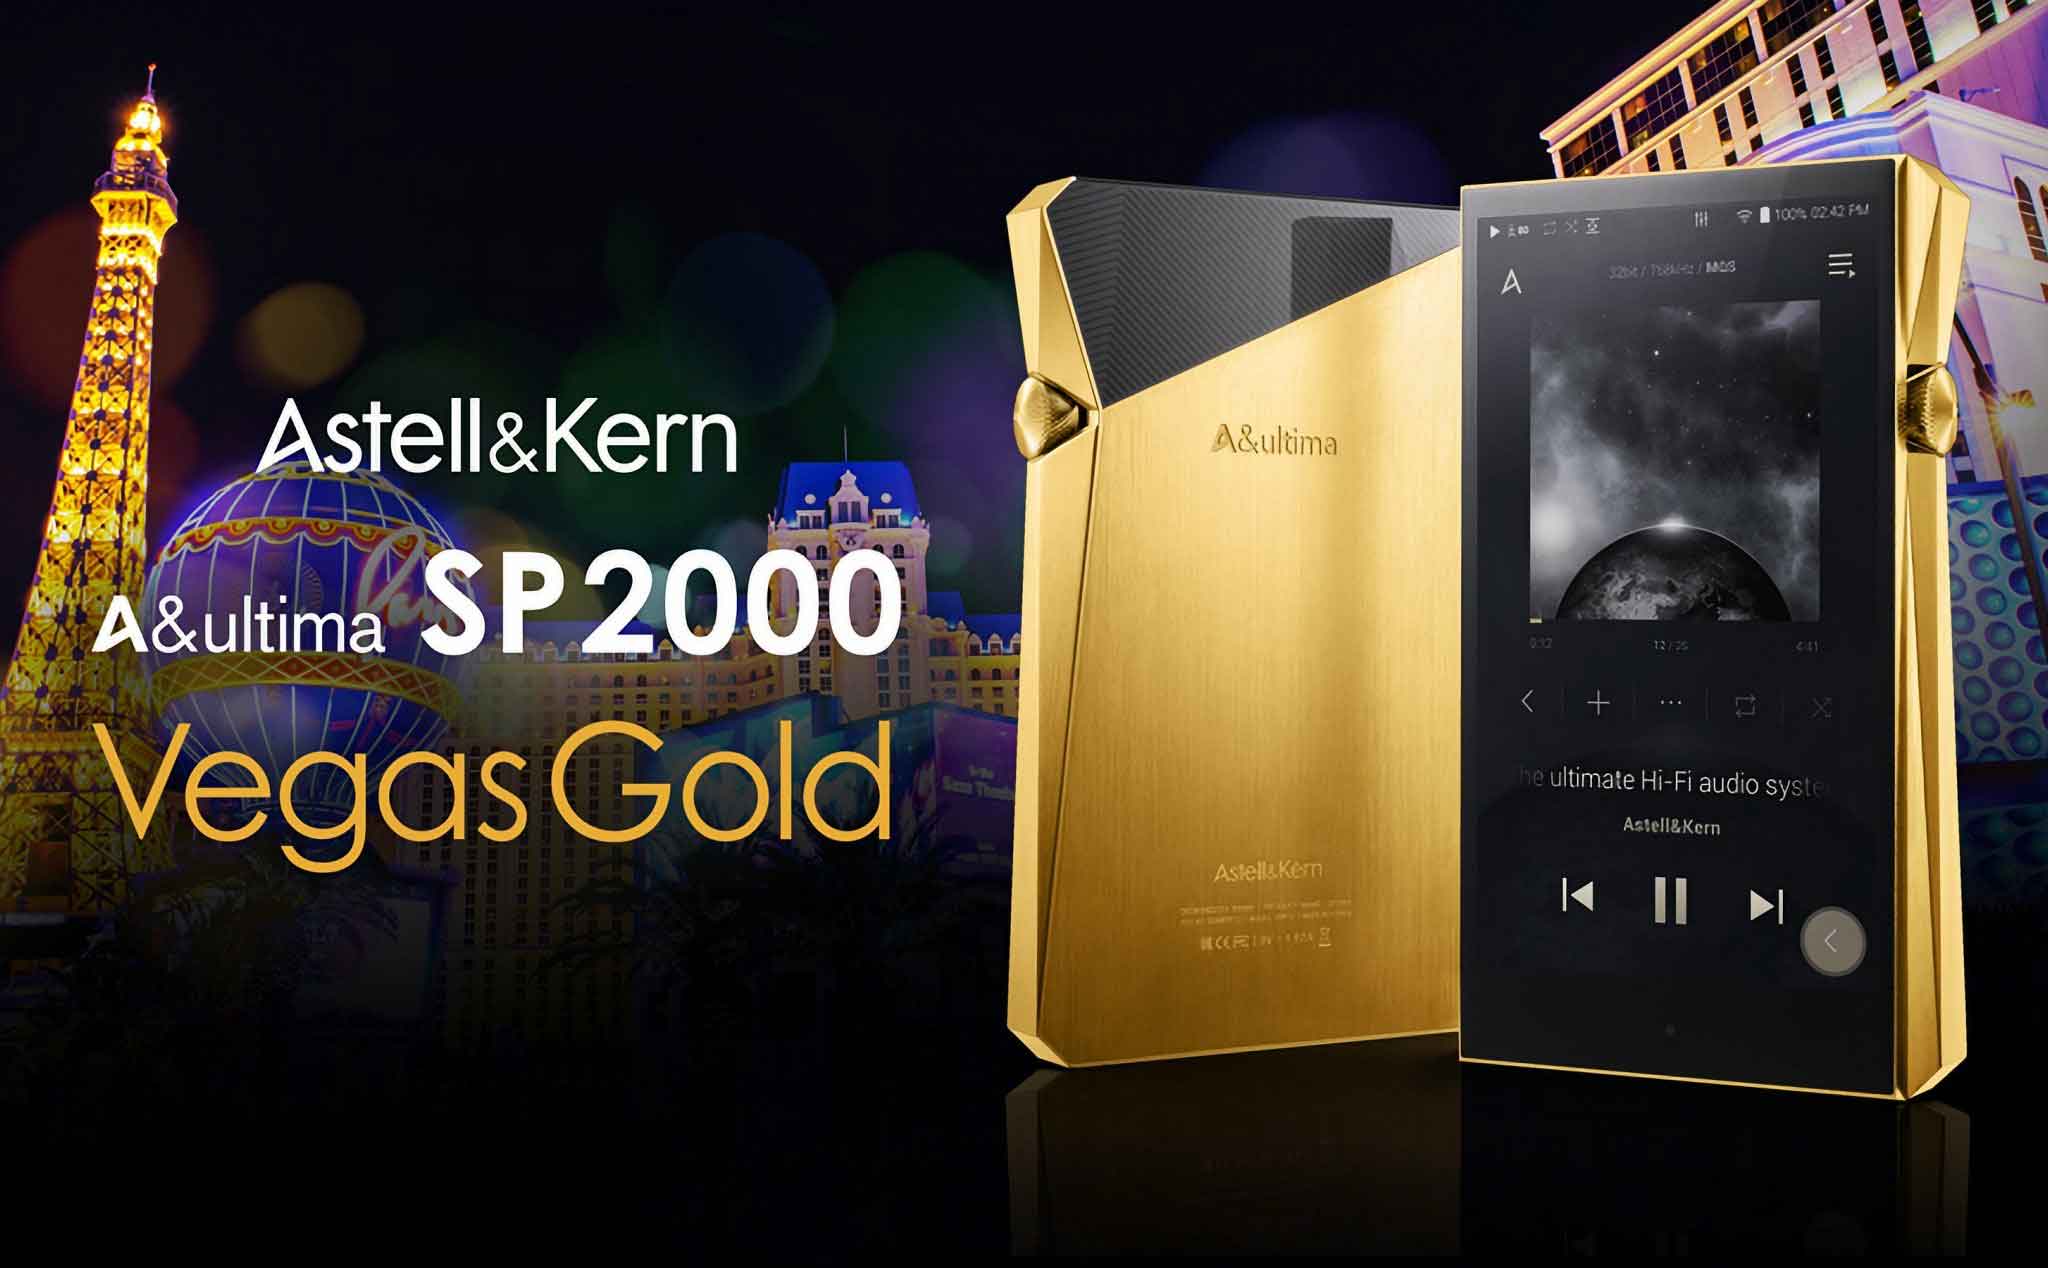 Astell & Kern SP2000 A&ultima Vegas Gold High-Resolution Music Player